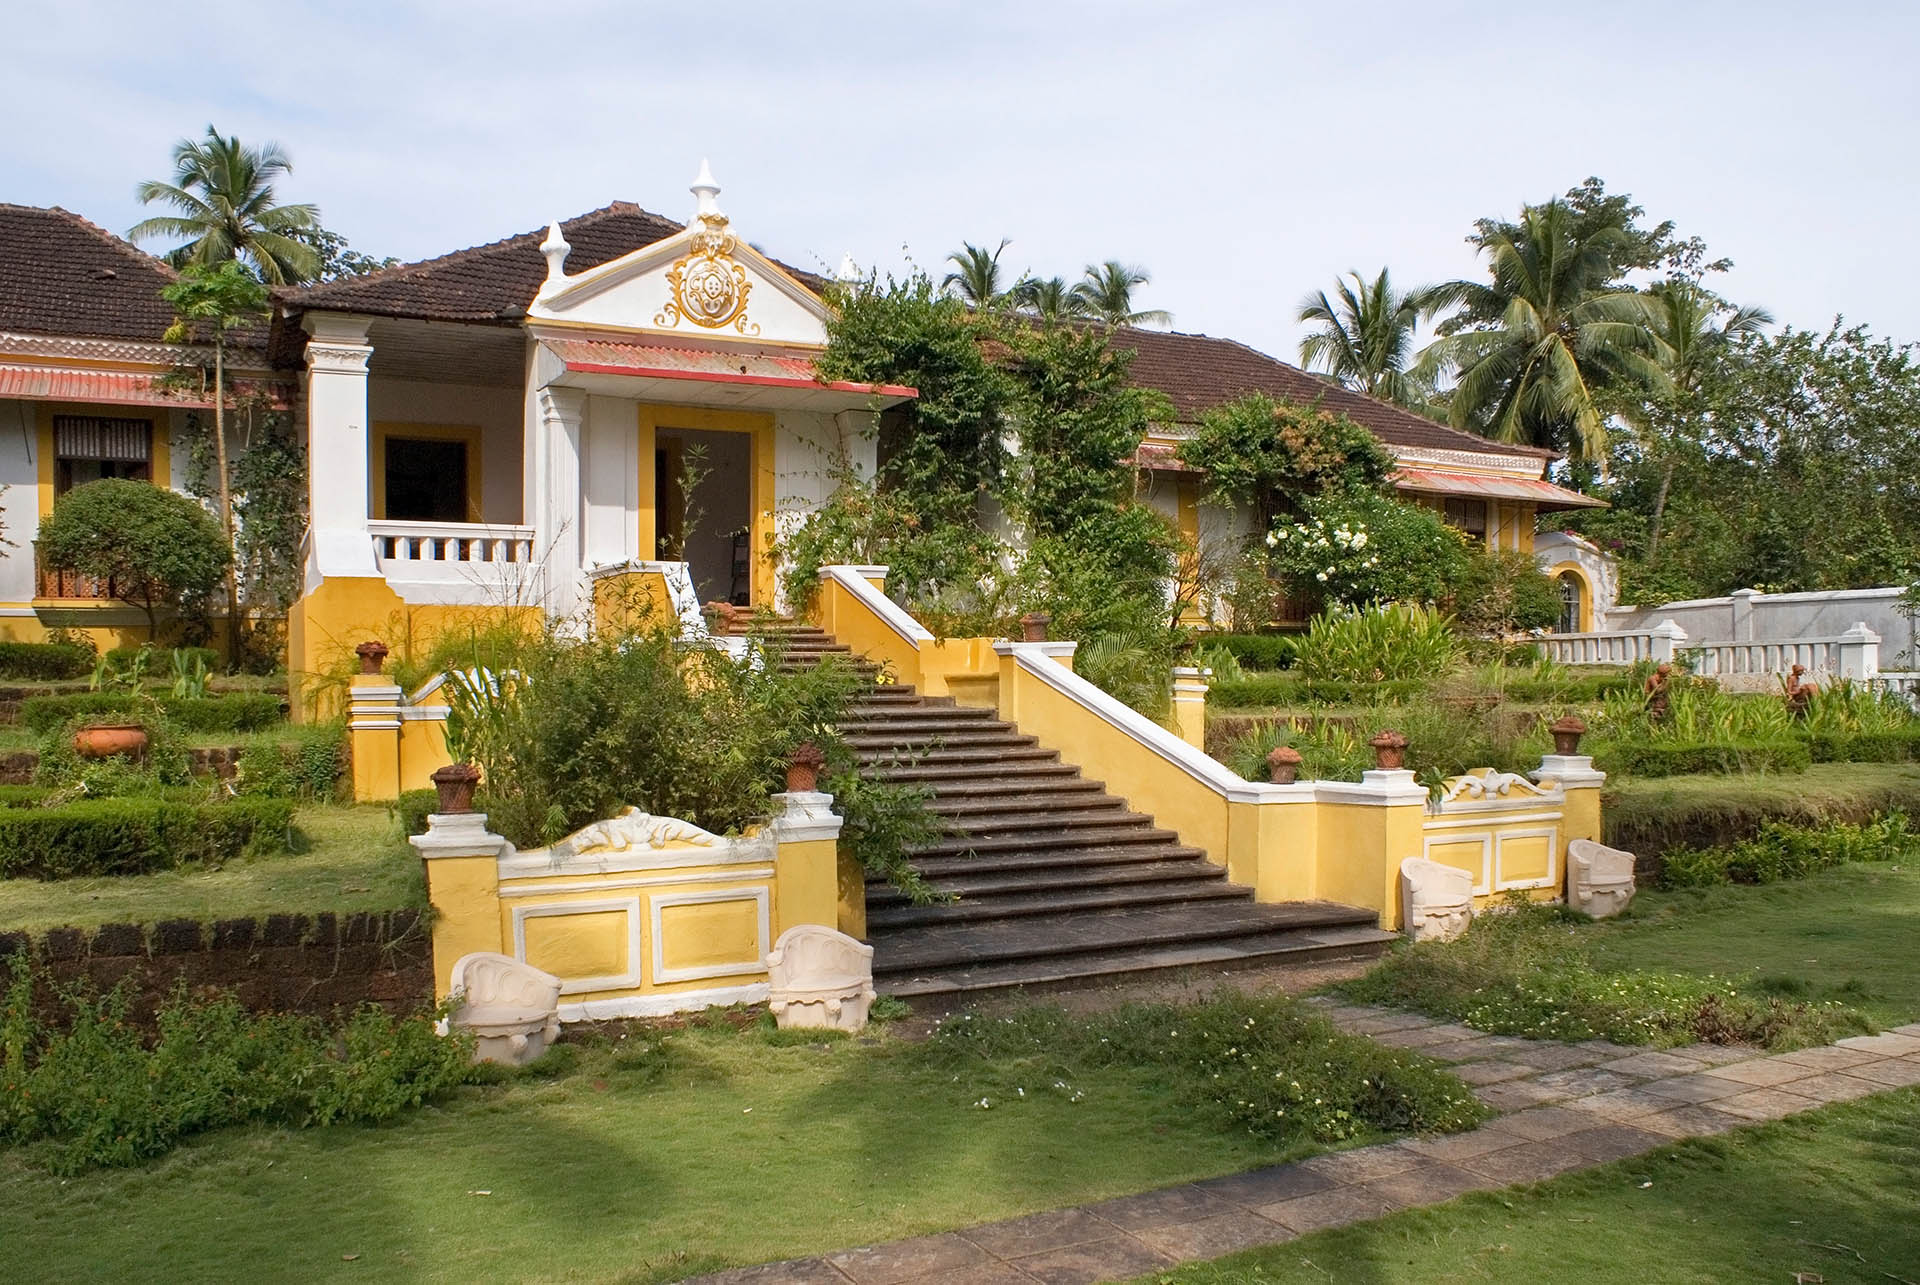 Palacio do Deao near Quepem. Goa. India © Shutterstock